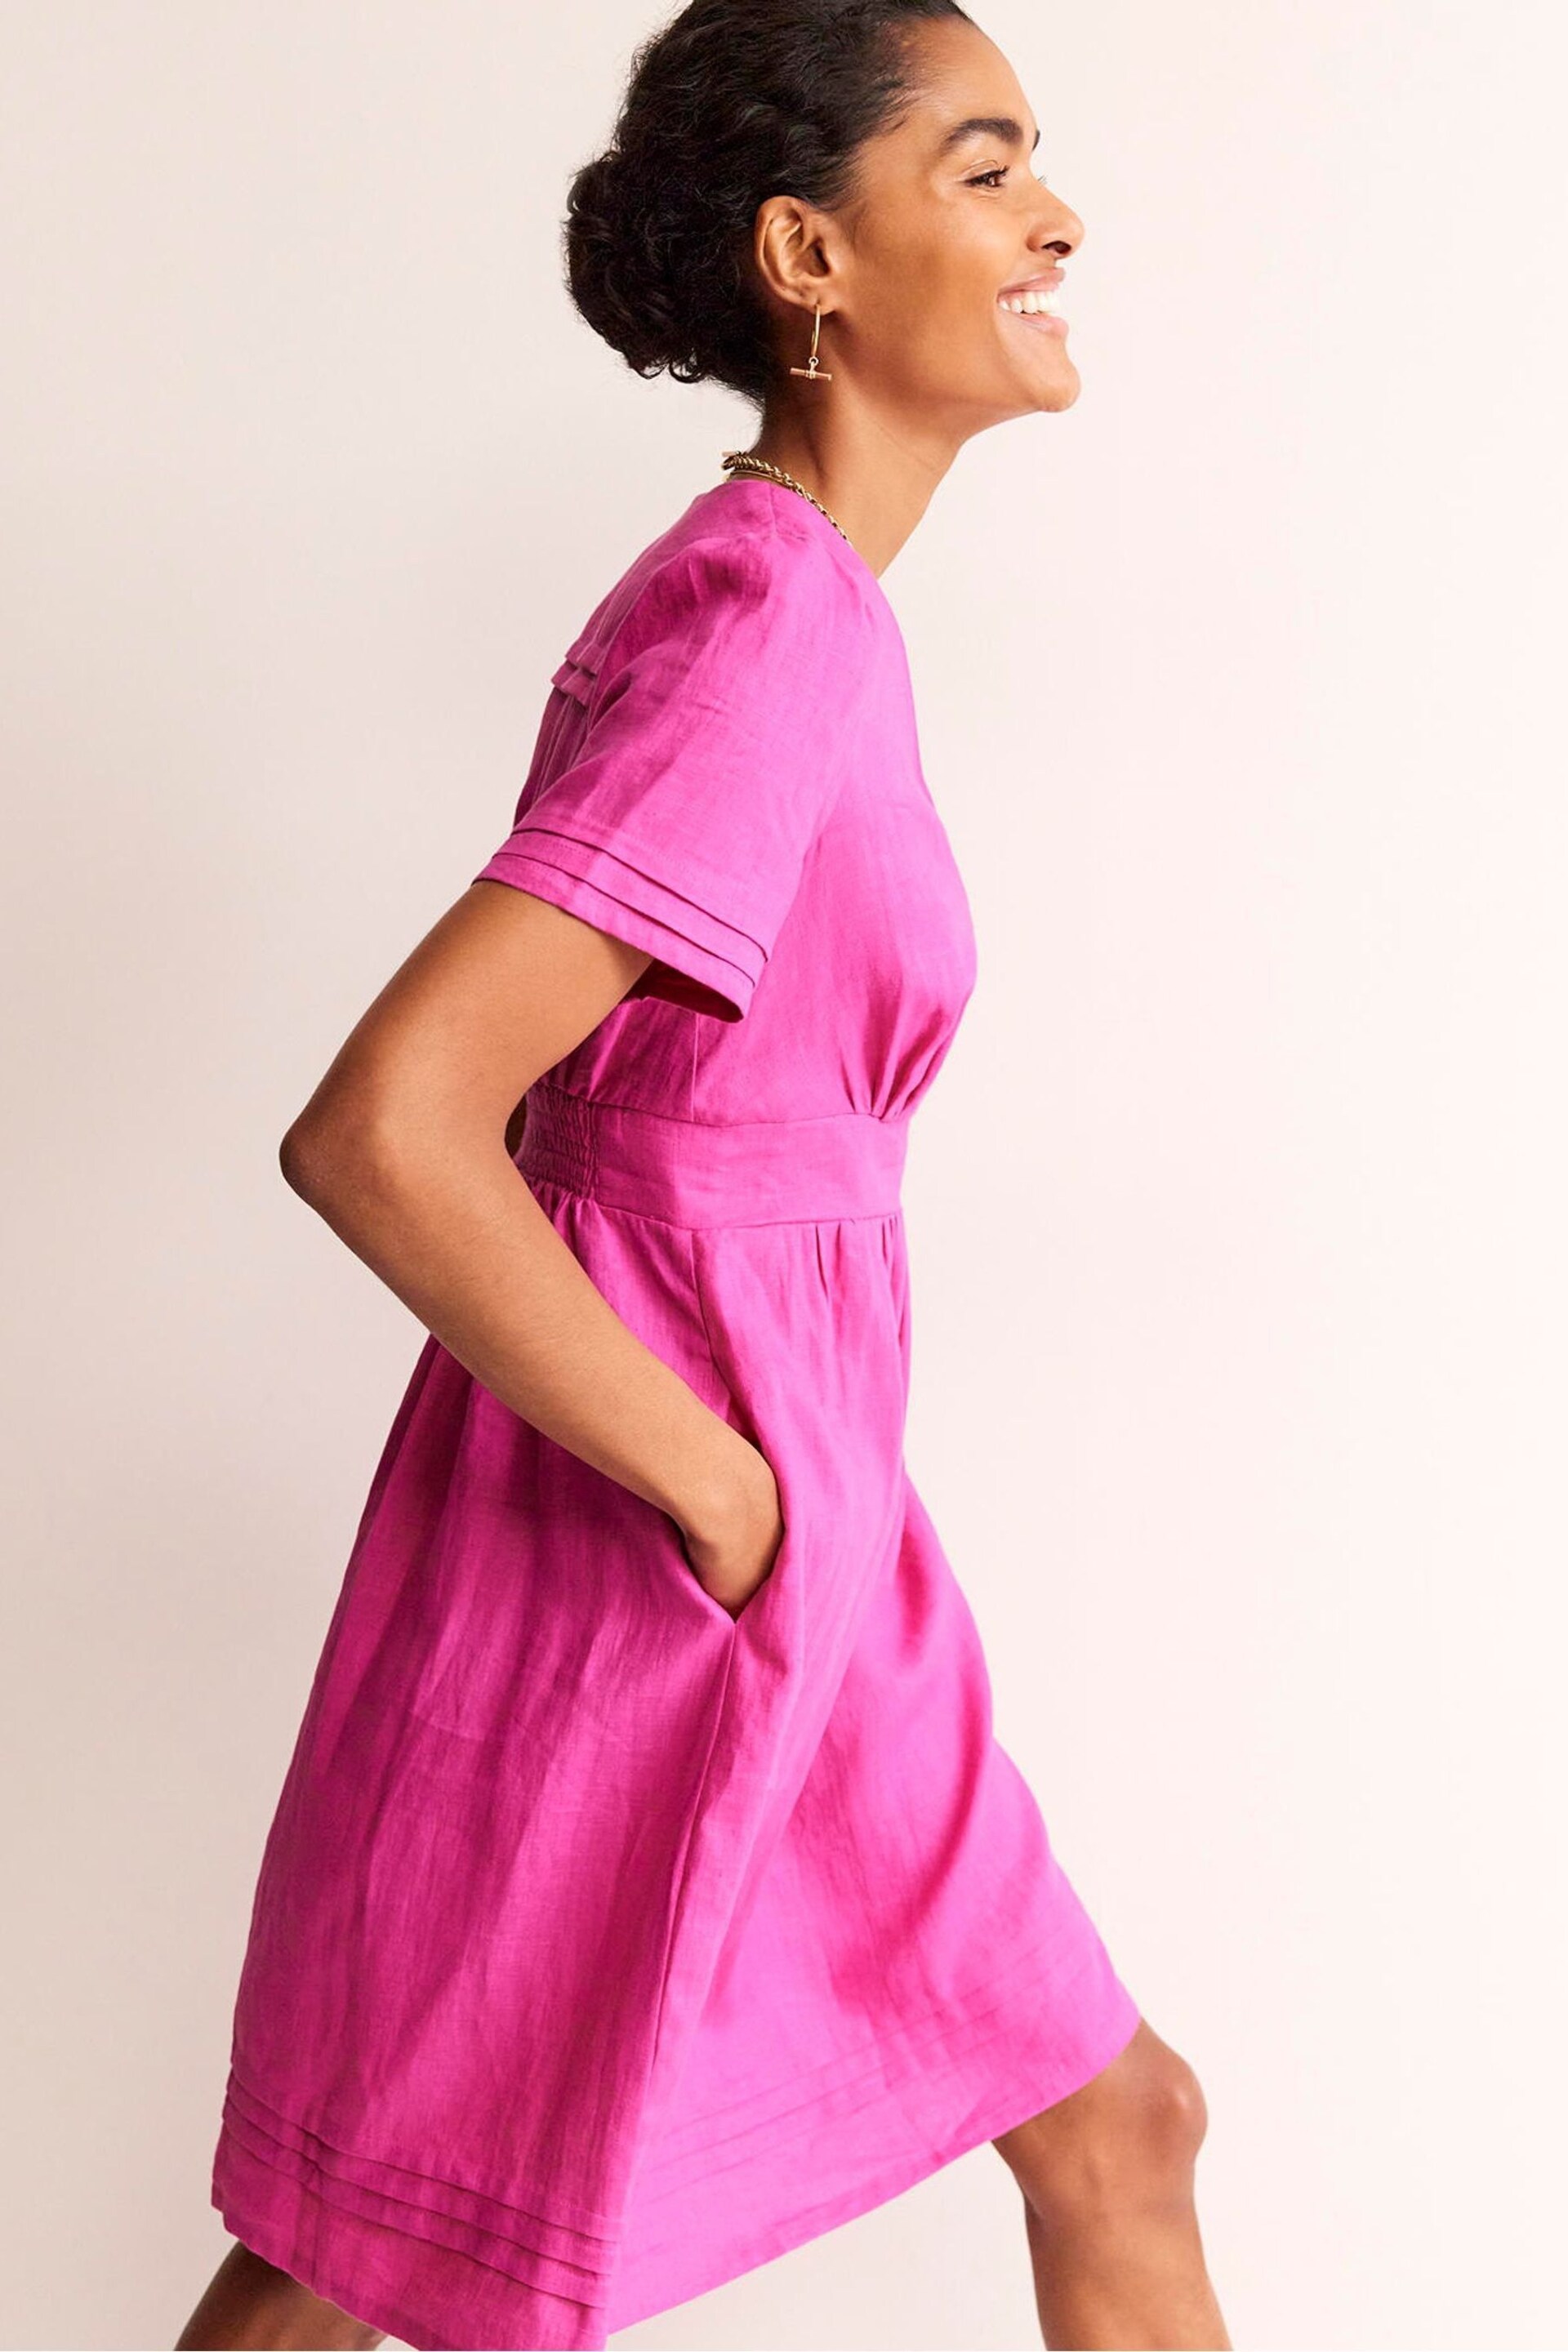 Boden Pink Petite Eve Linen Short Dress - Image 4 of 4